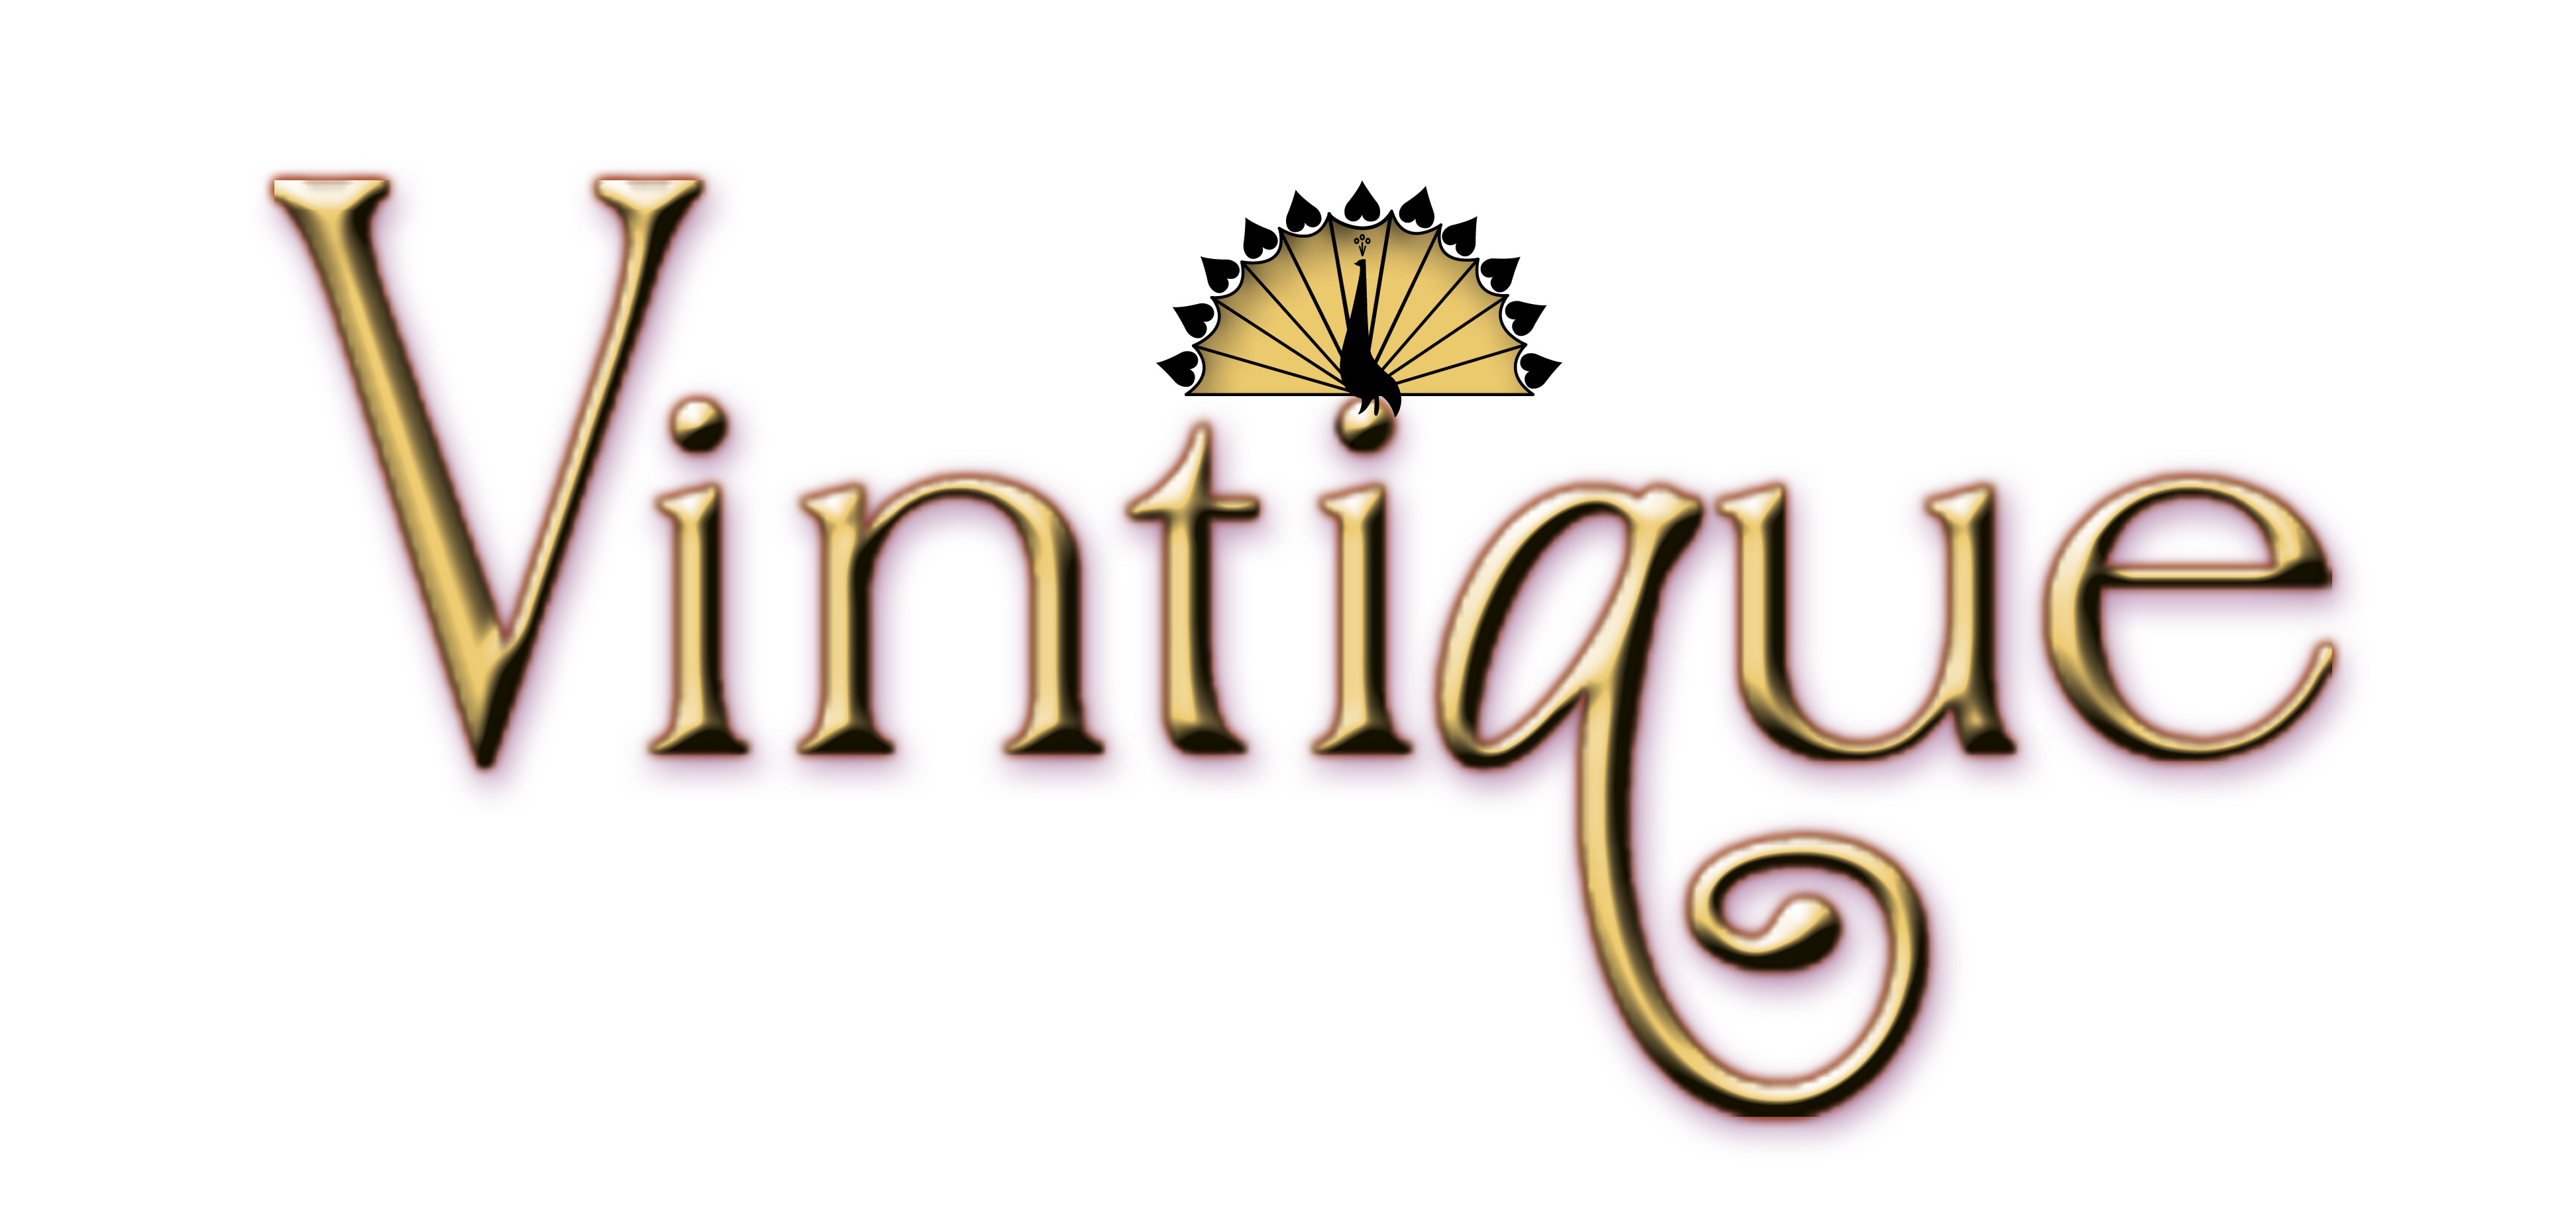 Vintique logo by Arnsman Design & Creative Solutions